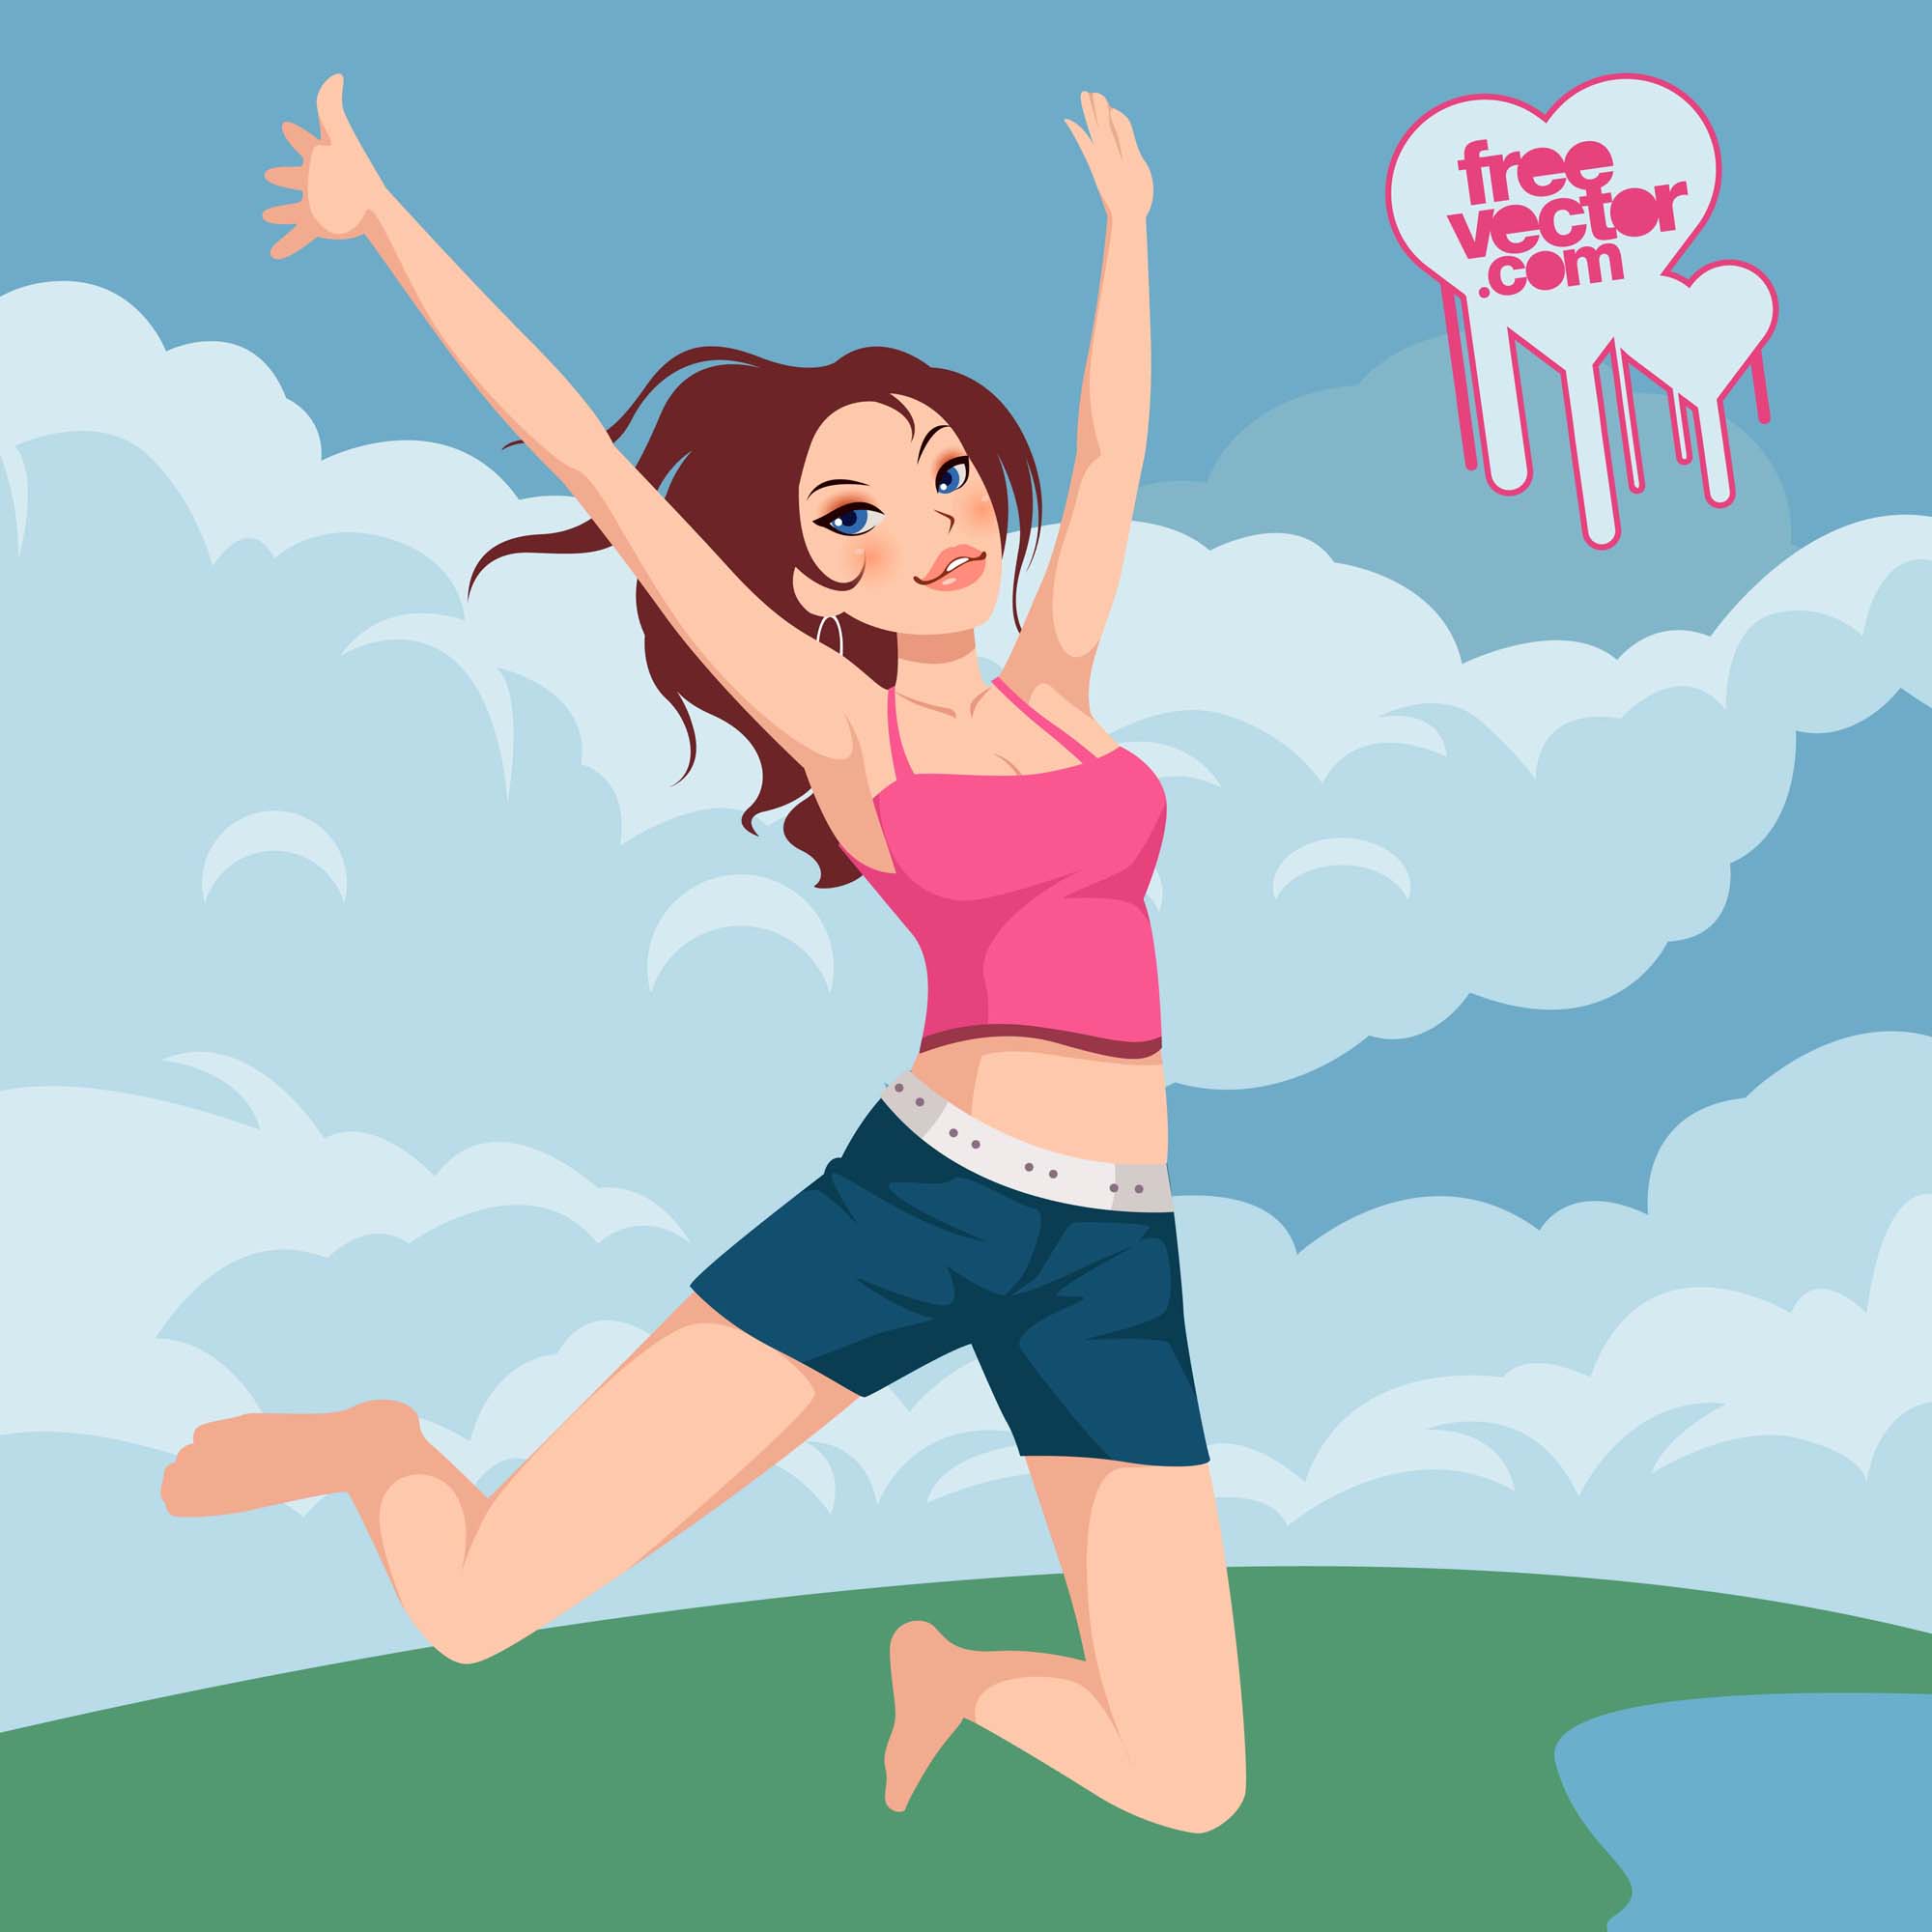 Download Jumping Girl Vector Vector Art & Graphics | freevector.com